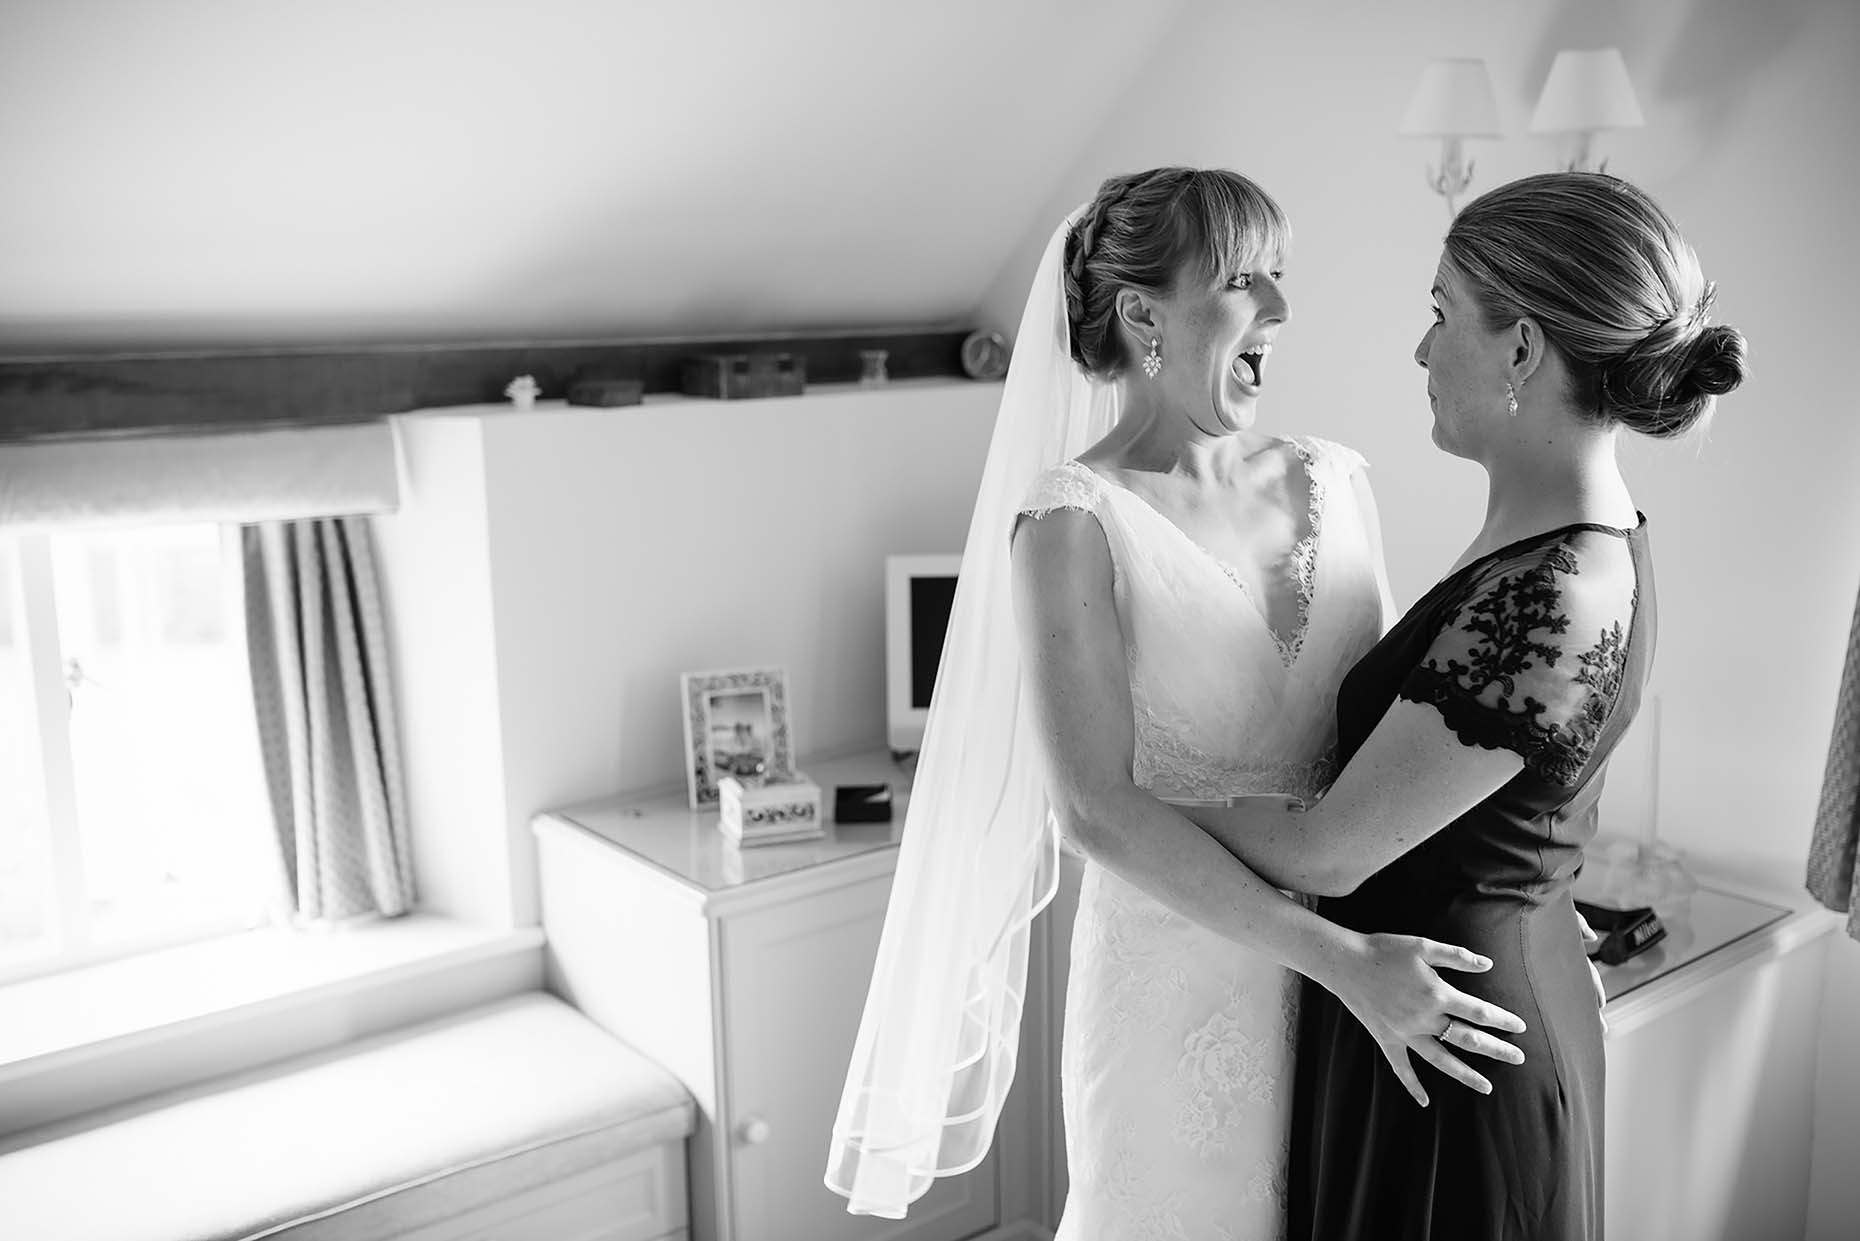 documentary-photo-bride-bridesmaid-hug-wedding-day-dorset-22